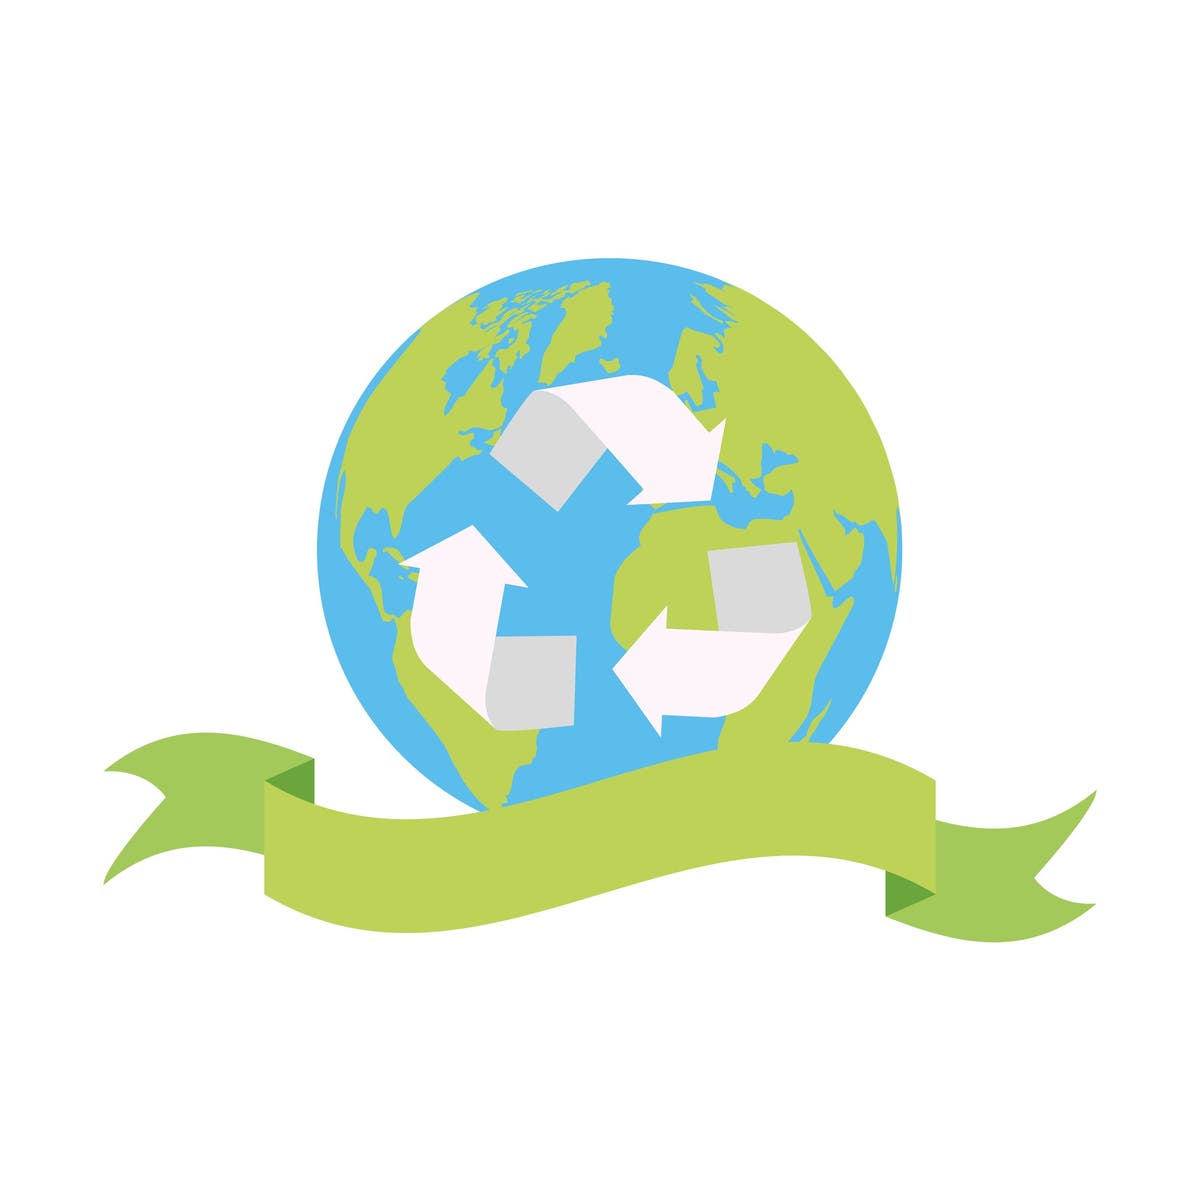 Happy Earth Day! Adobe Insiders inspire environmental change to #RestoreOurEarth